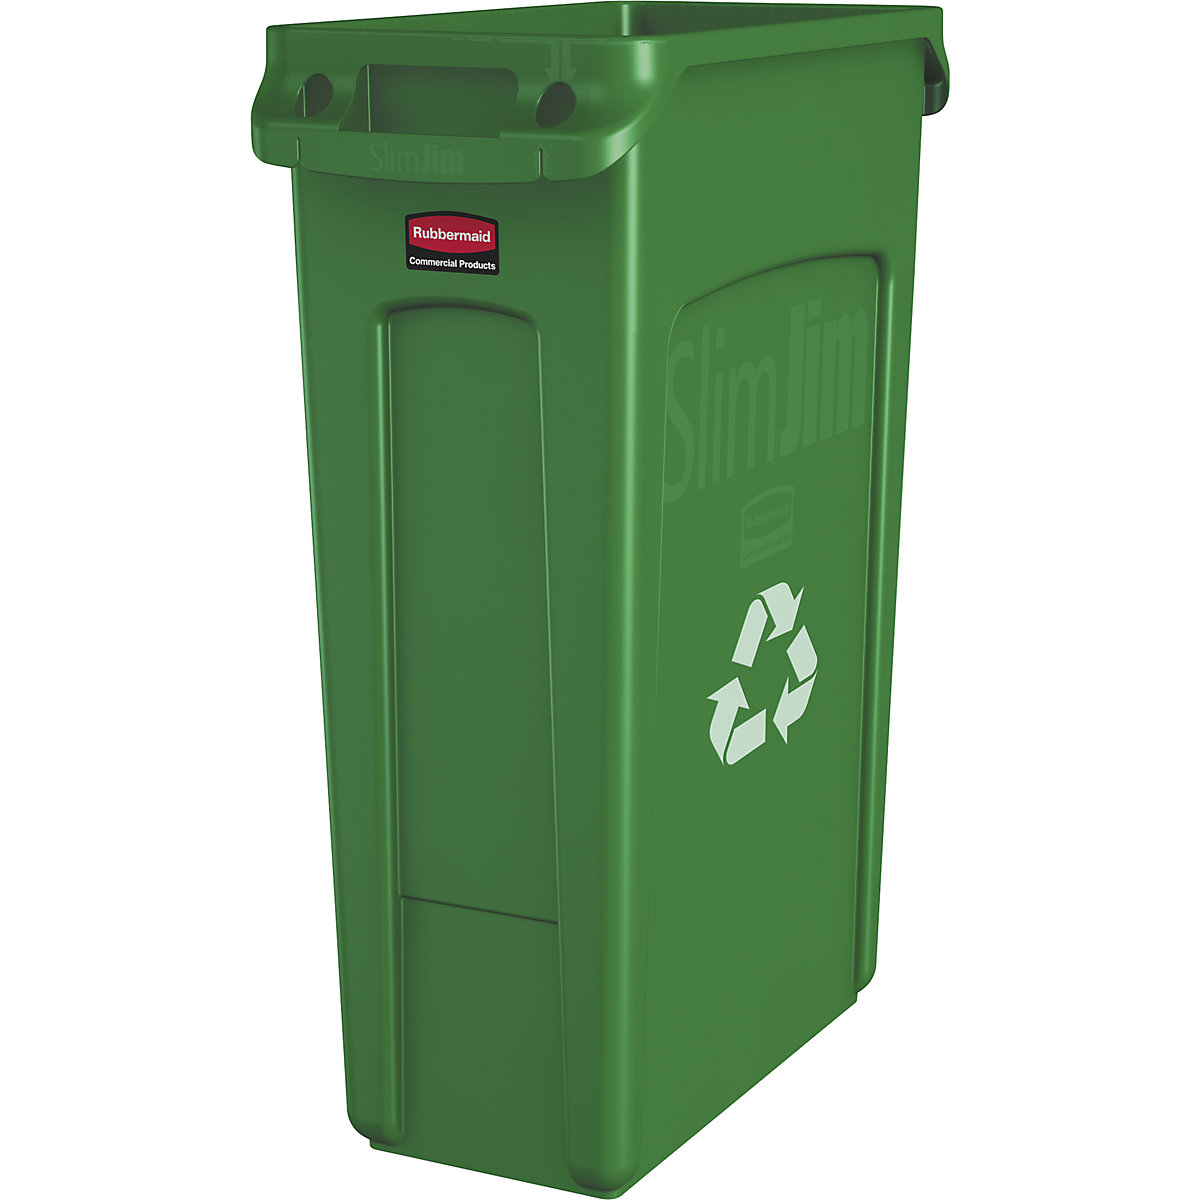 SLIM JIM® recyclable waste collector/waste bin – Rubbermaid